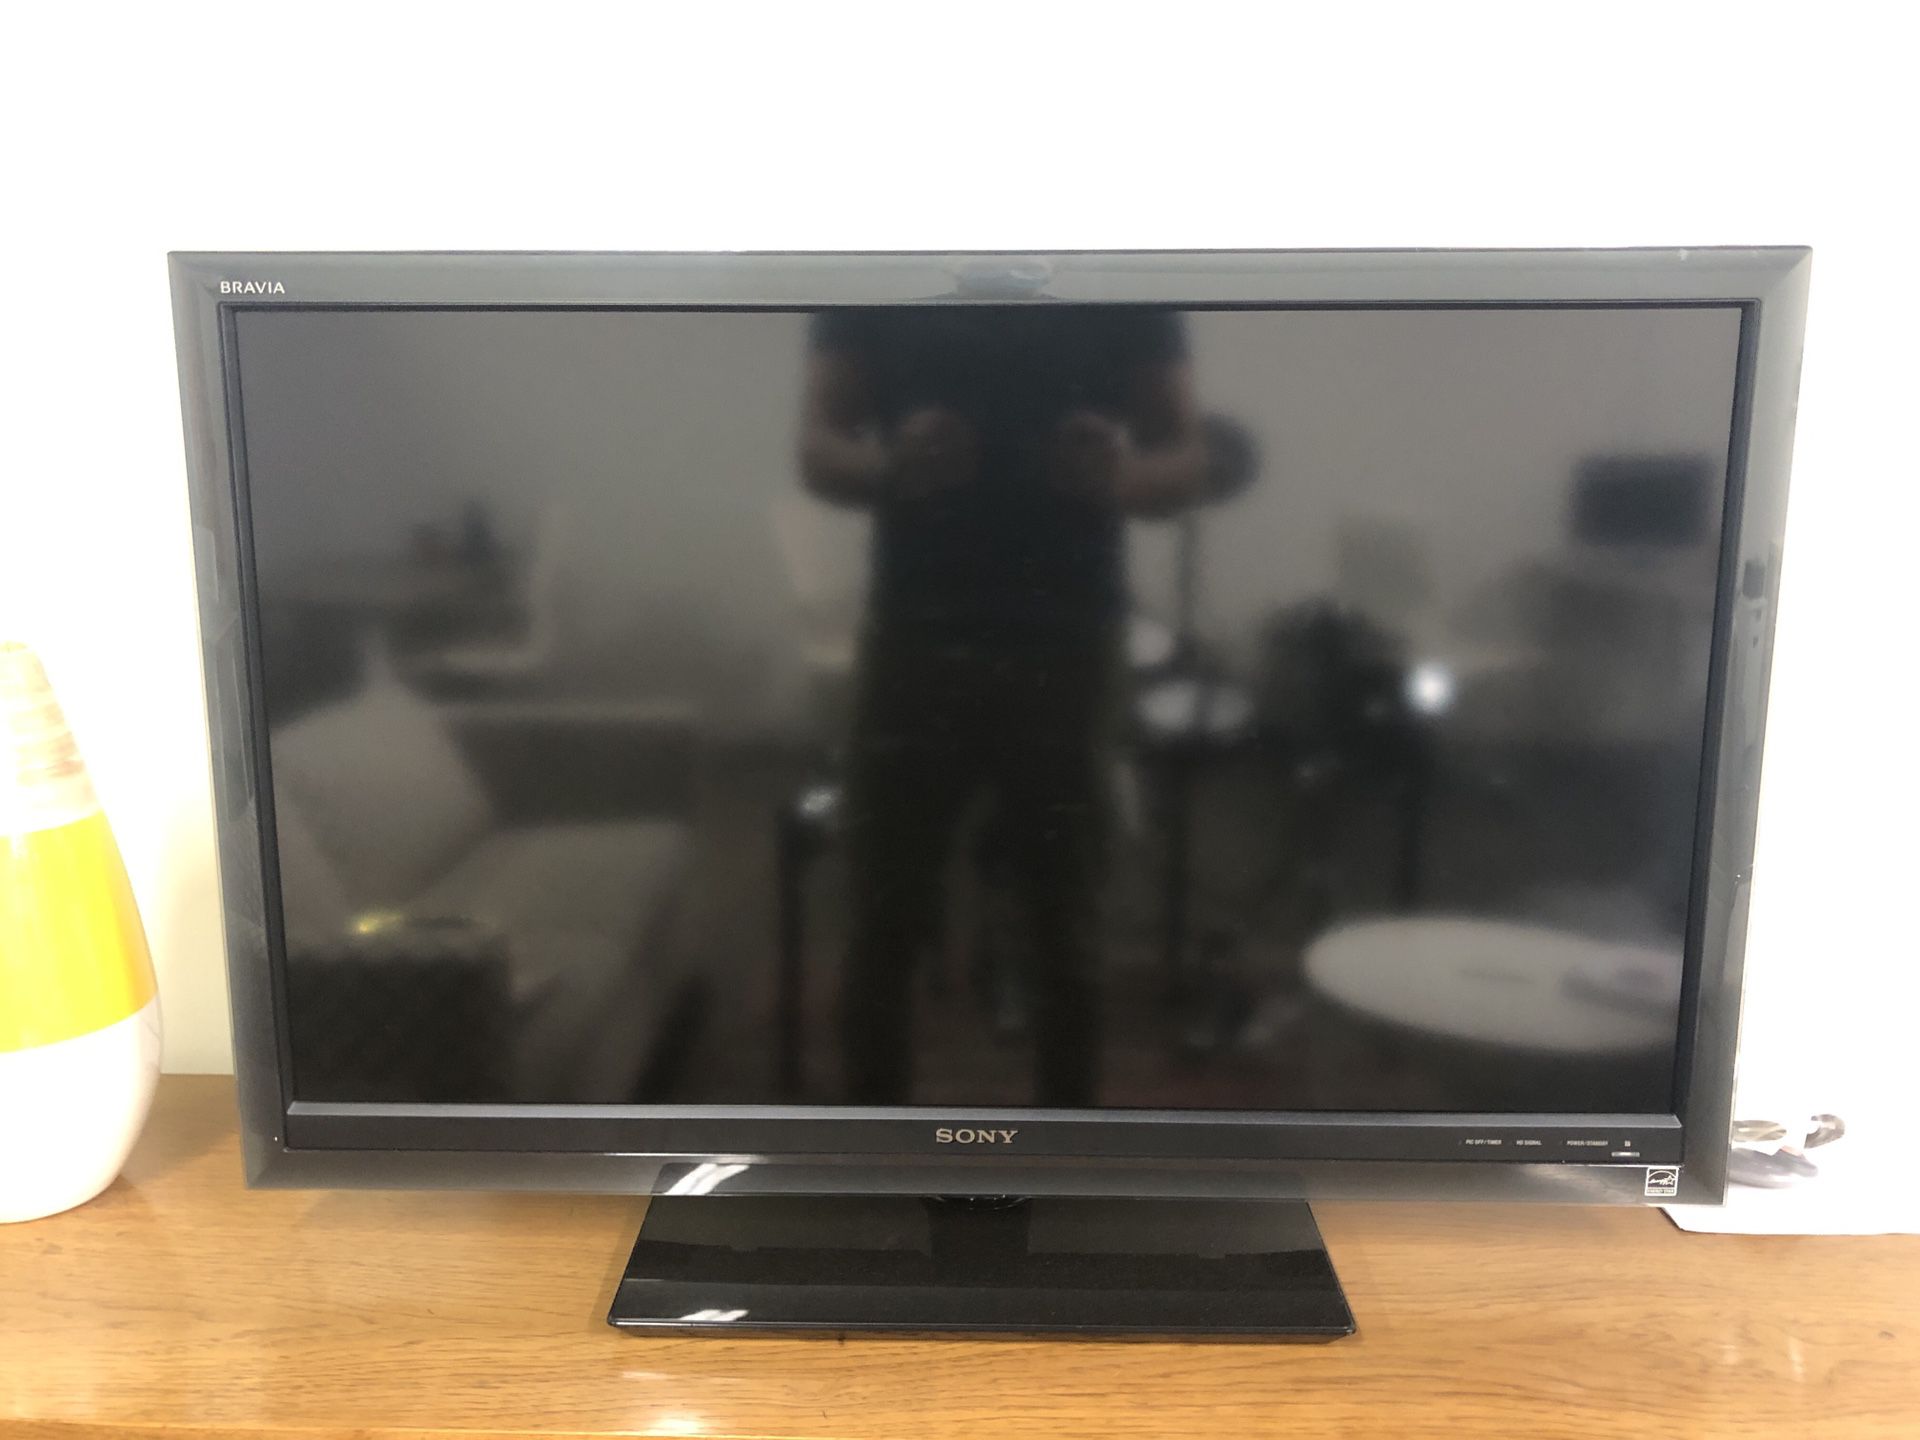 Sony Bravia flatscreen TV